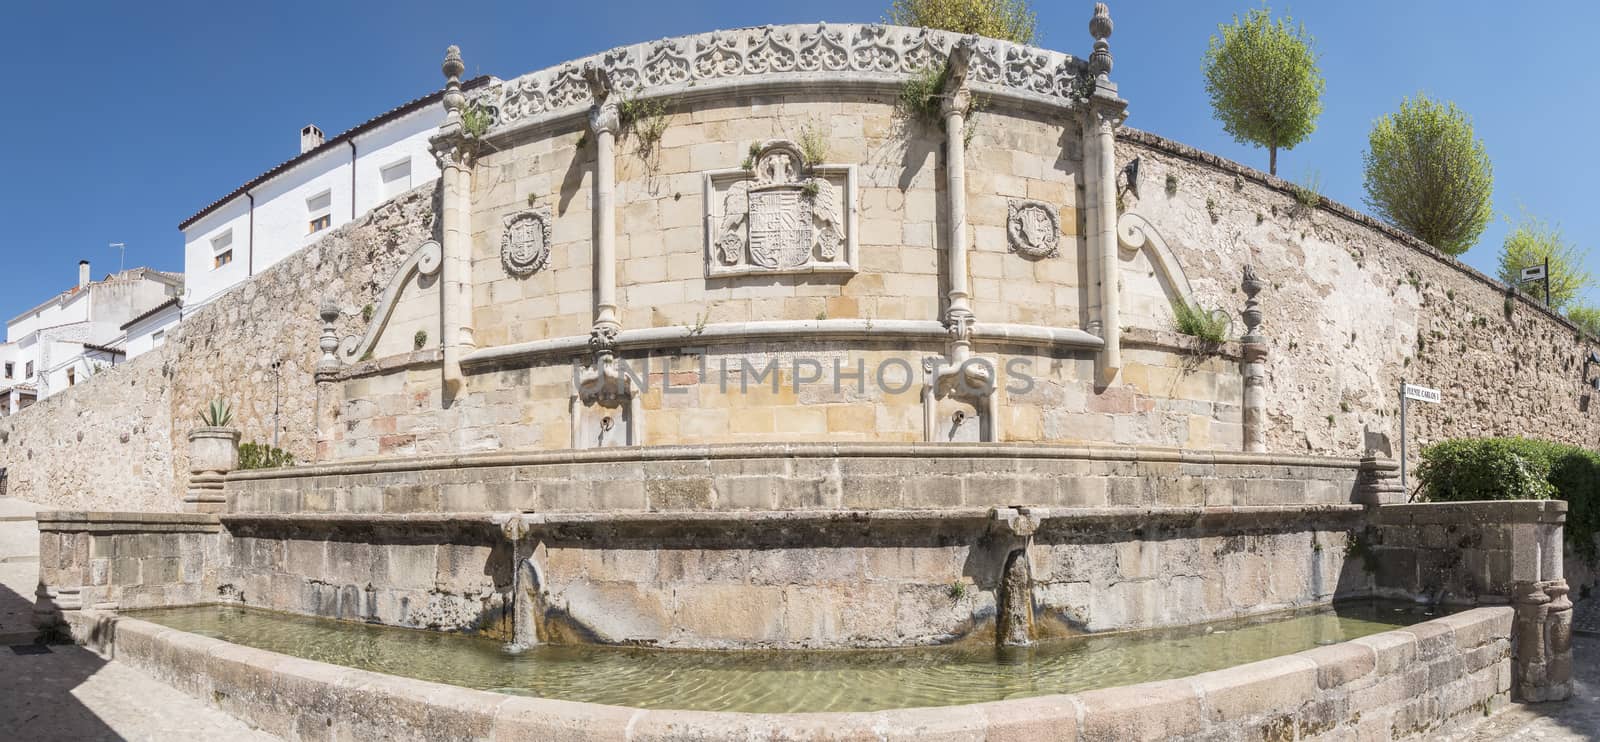 Imperial or Carlos V fountain, Sierra de segura, Jaen, Spain